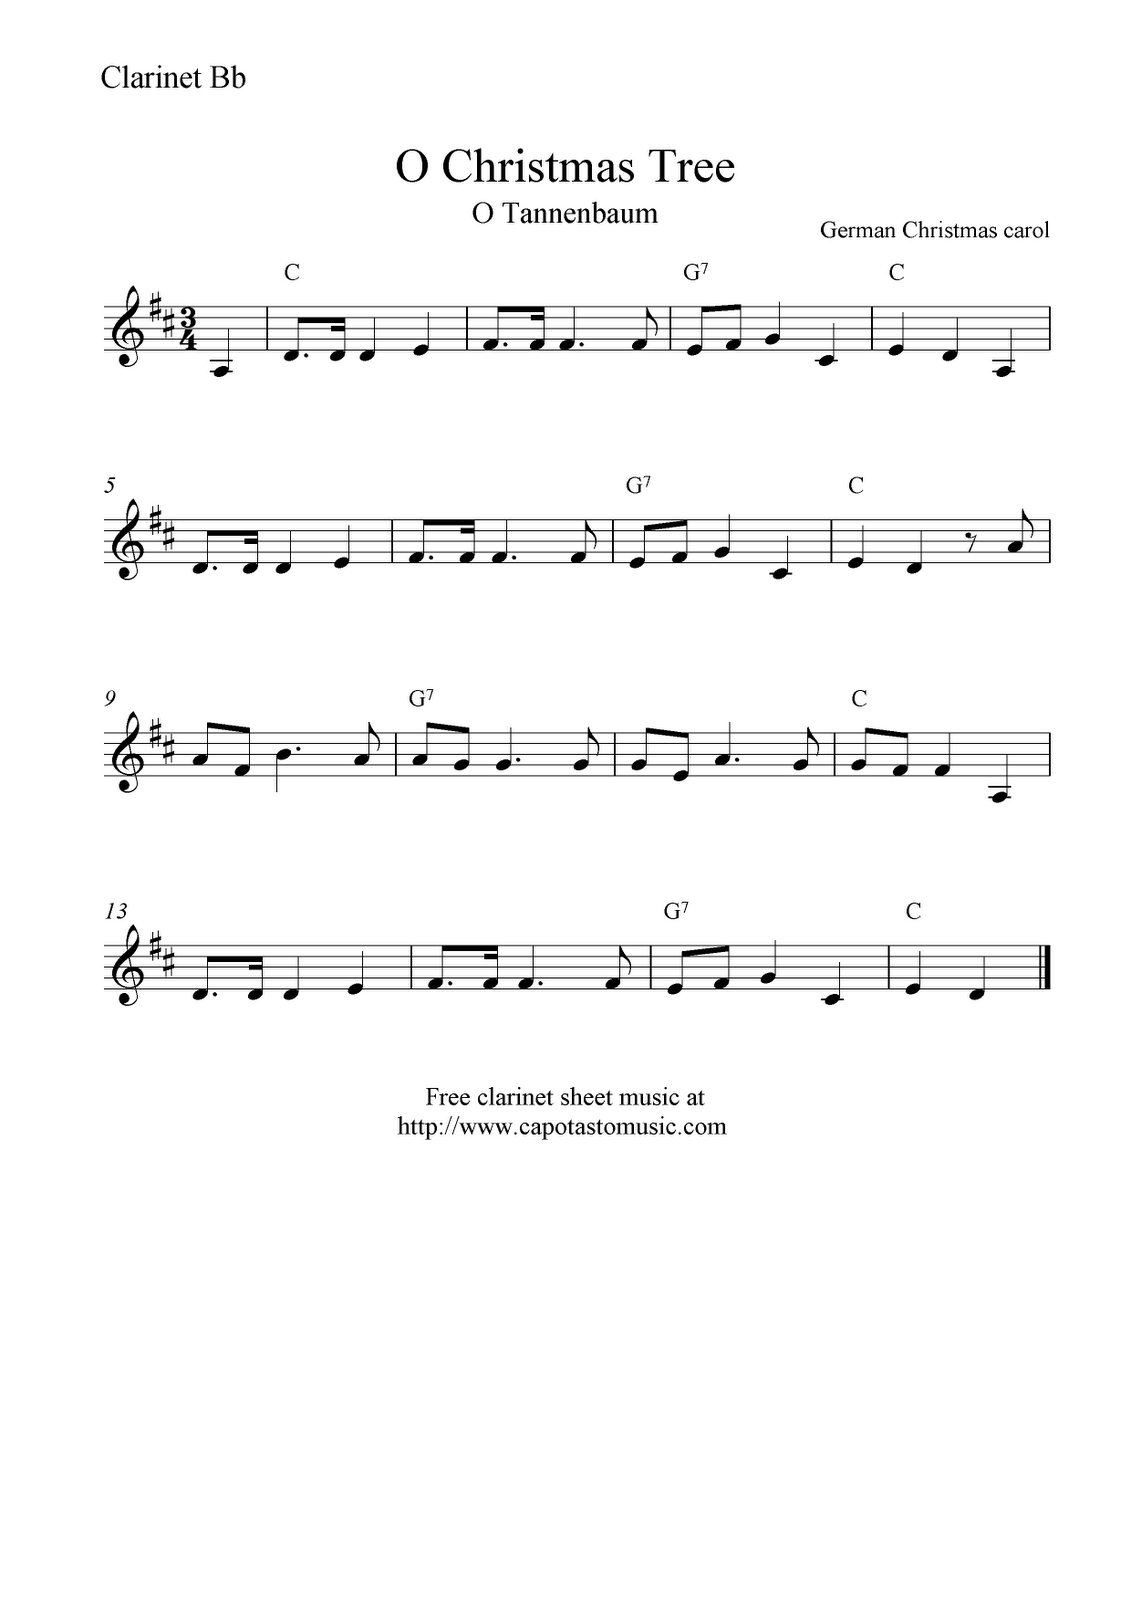 Free Sheet Music Scores: O Christmas Tree (O Tannenbaum), Free - Free Printable Christmas Sheet Music For Clarinet